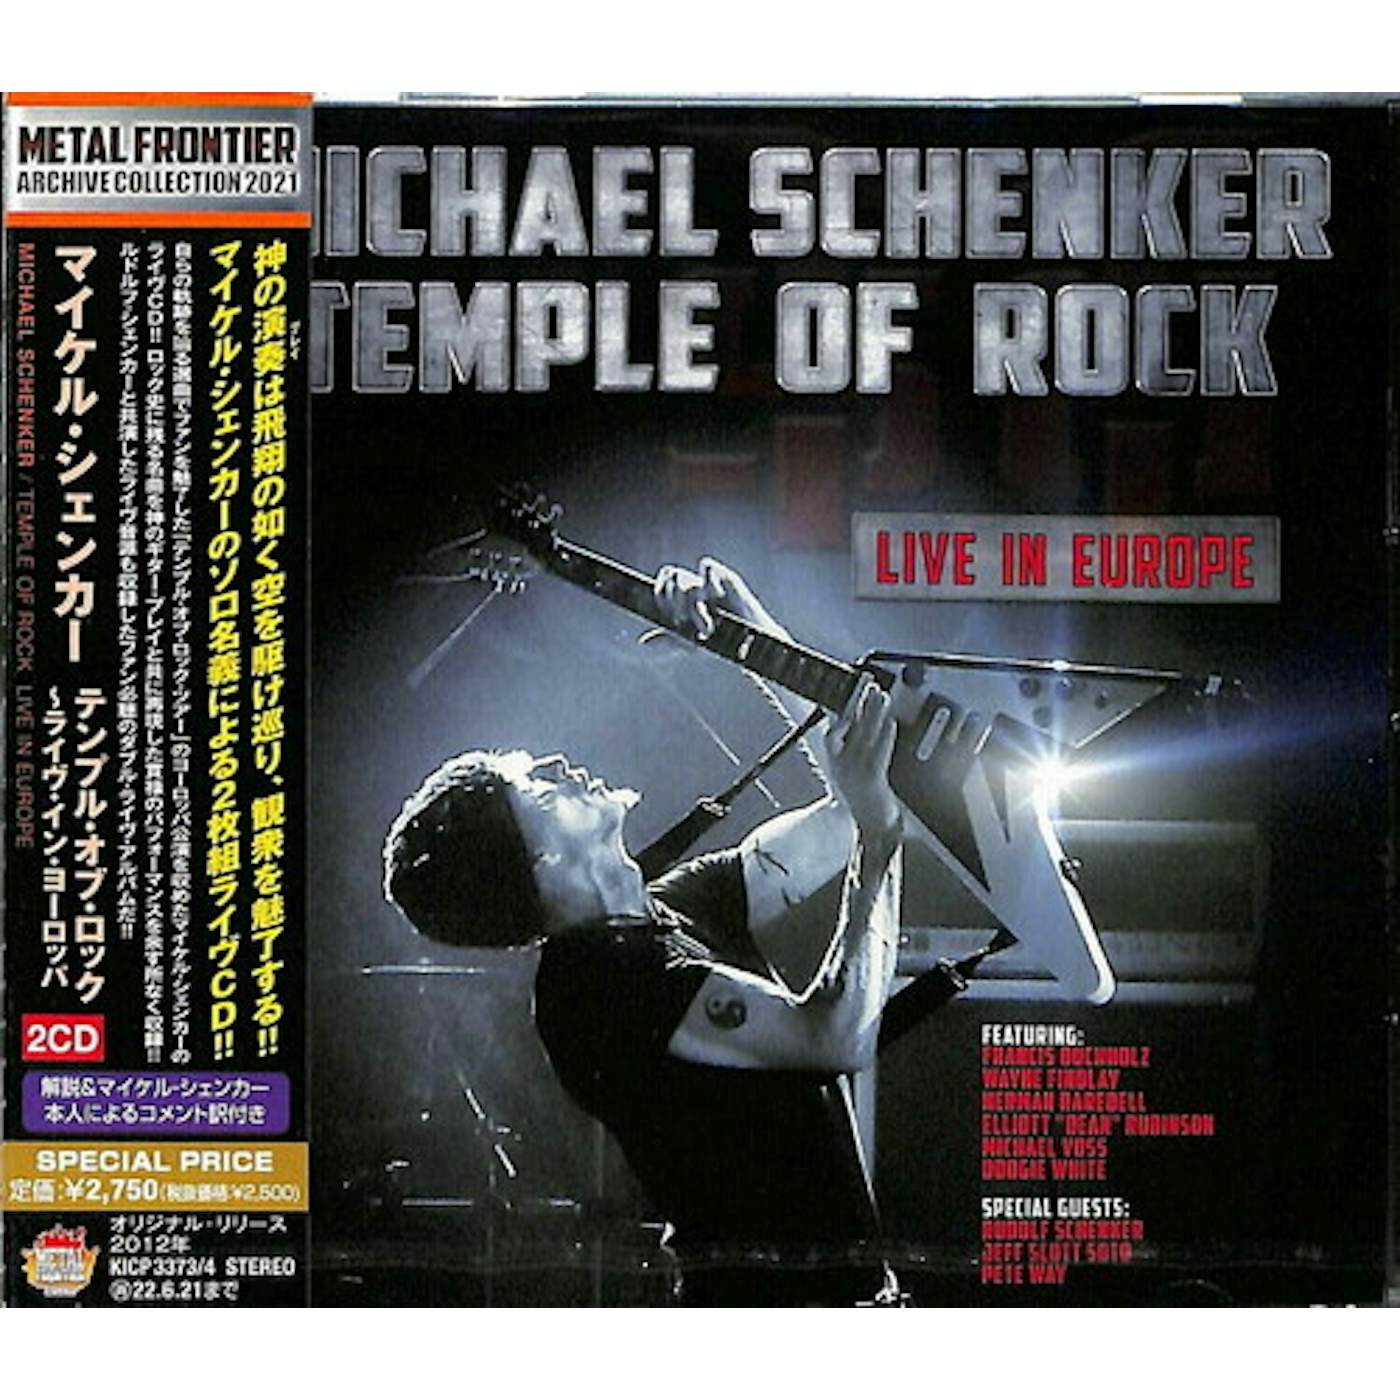 Michael Schenker Group TEMPLE OF ROCK LIVE IN EUROPE CD